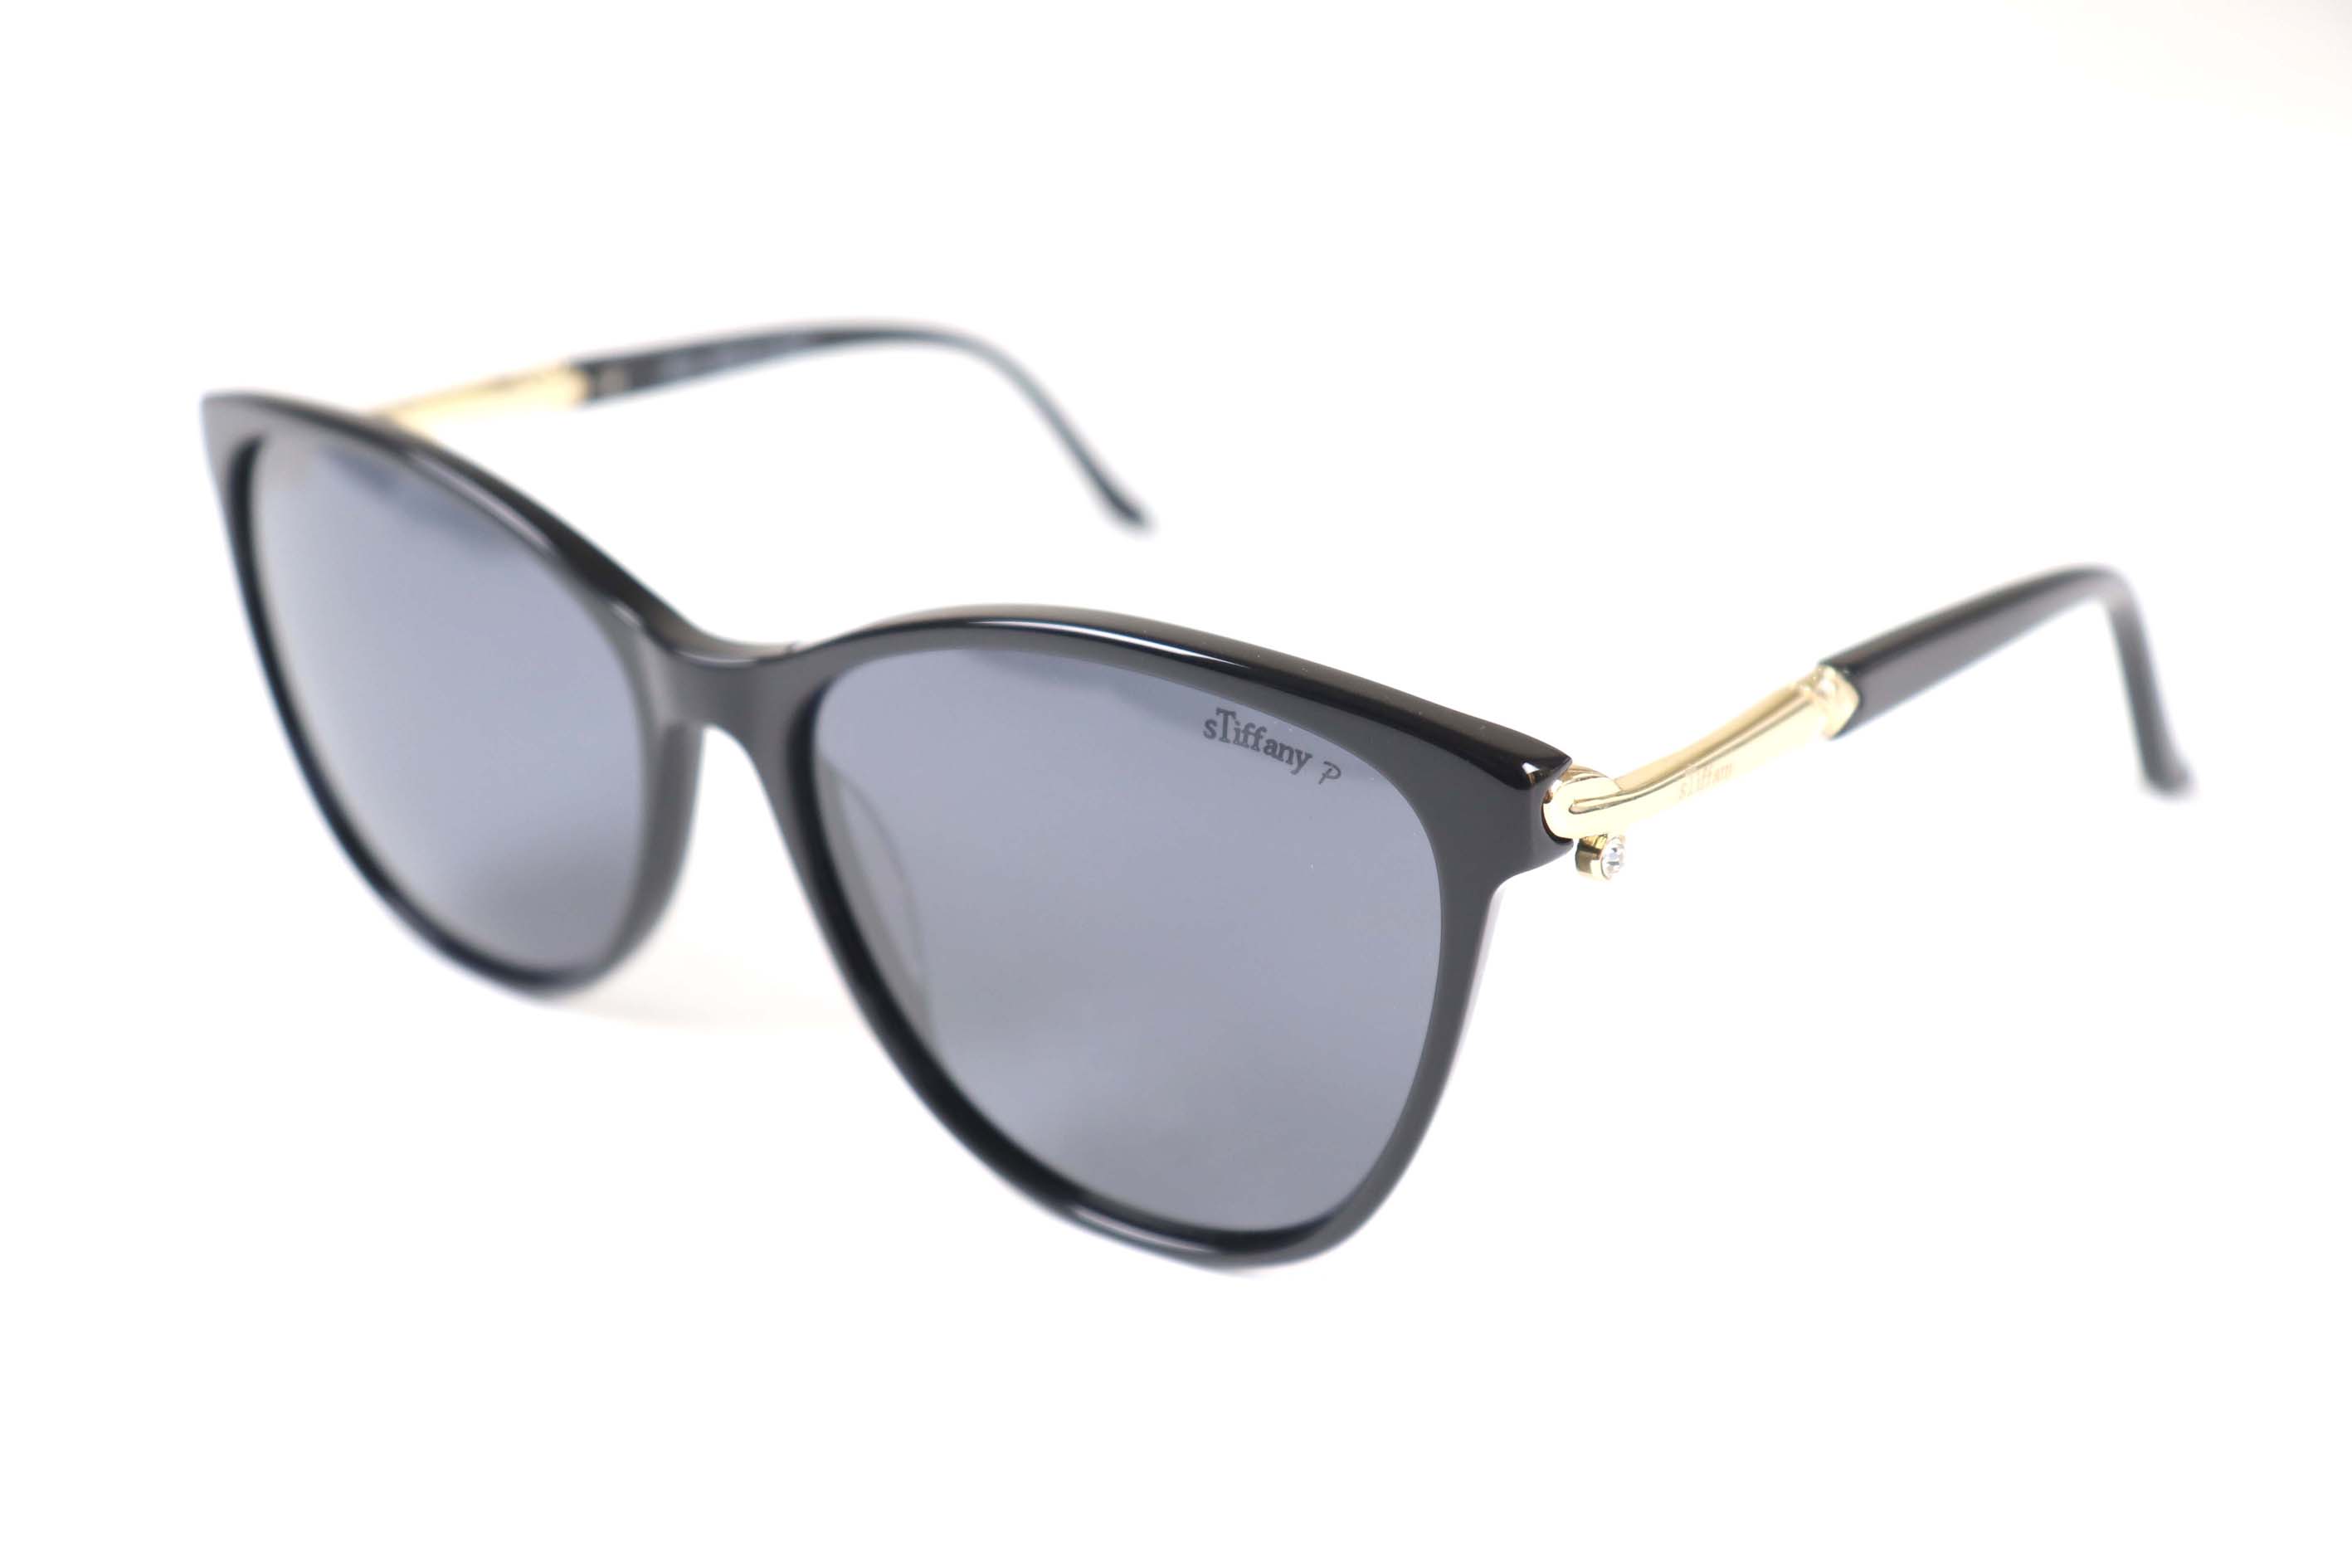 Stiffany Sunglasses-OR-OAK19090-C1-S